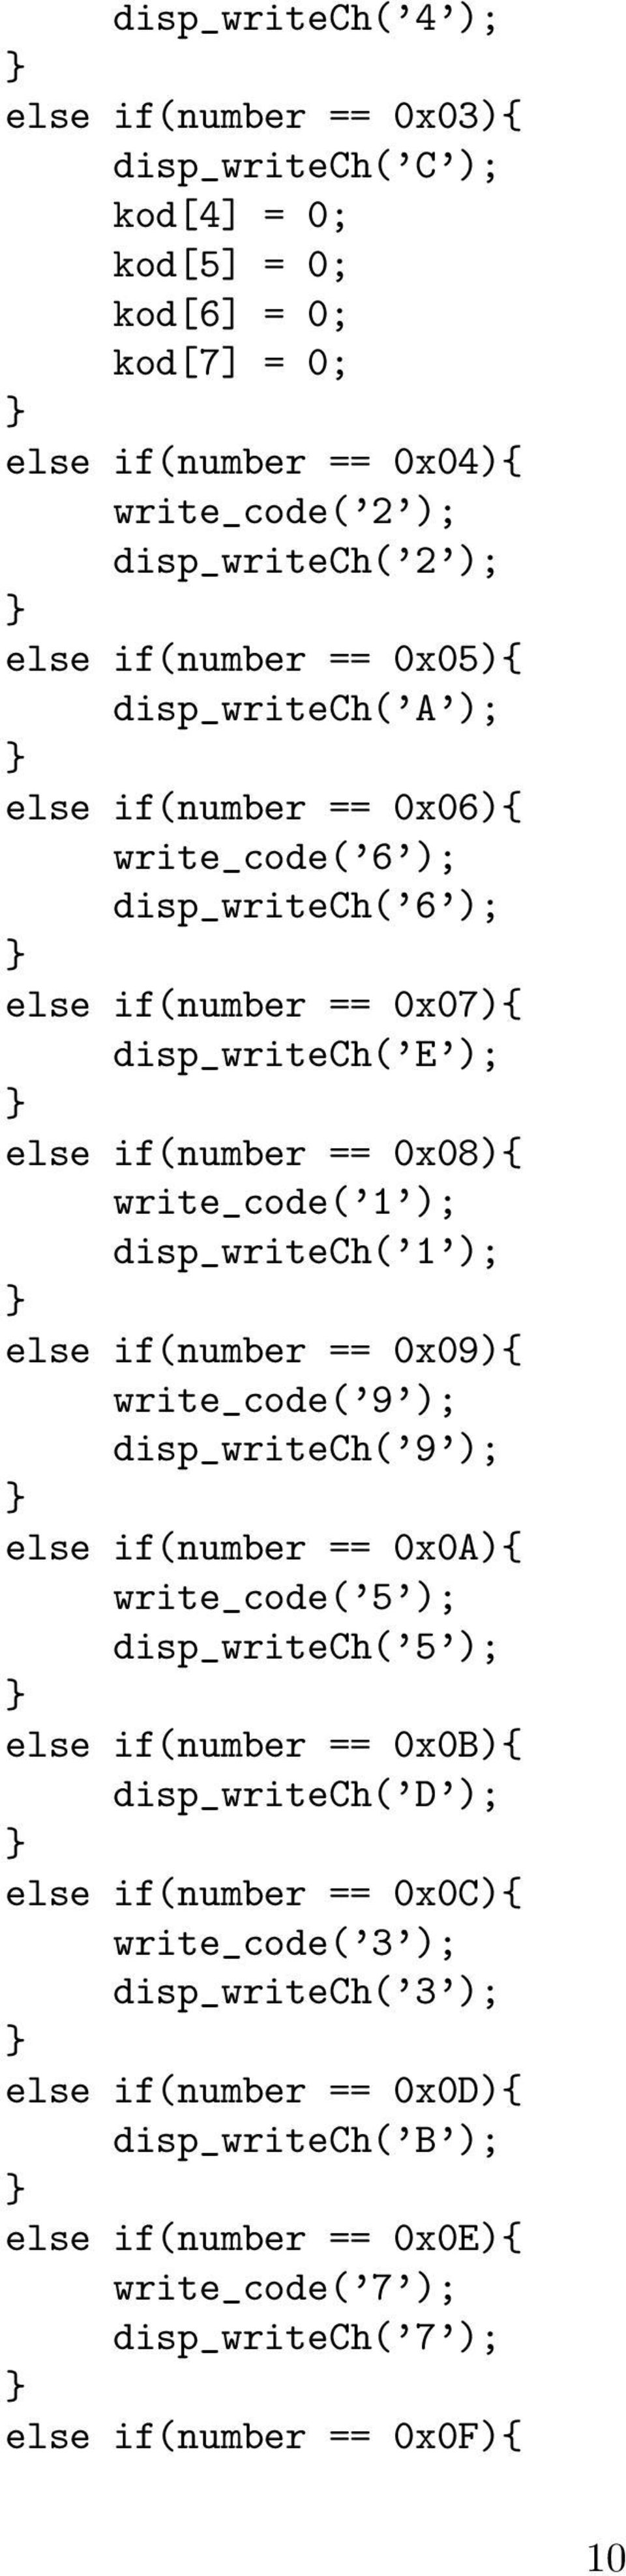 disp_writech( 1 ); else if(number == 0x09){ write_code( 9 ); disp_writech( 9 ); else if(number == 0x0A){ write_code( 5 ); disp_writech( 5 ); else if(number == 0x0B){ disp_writech( D );